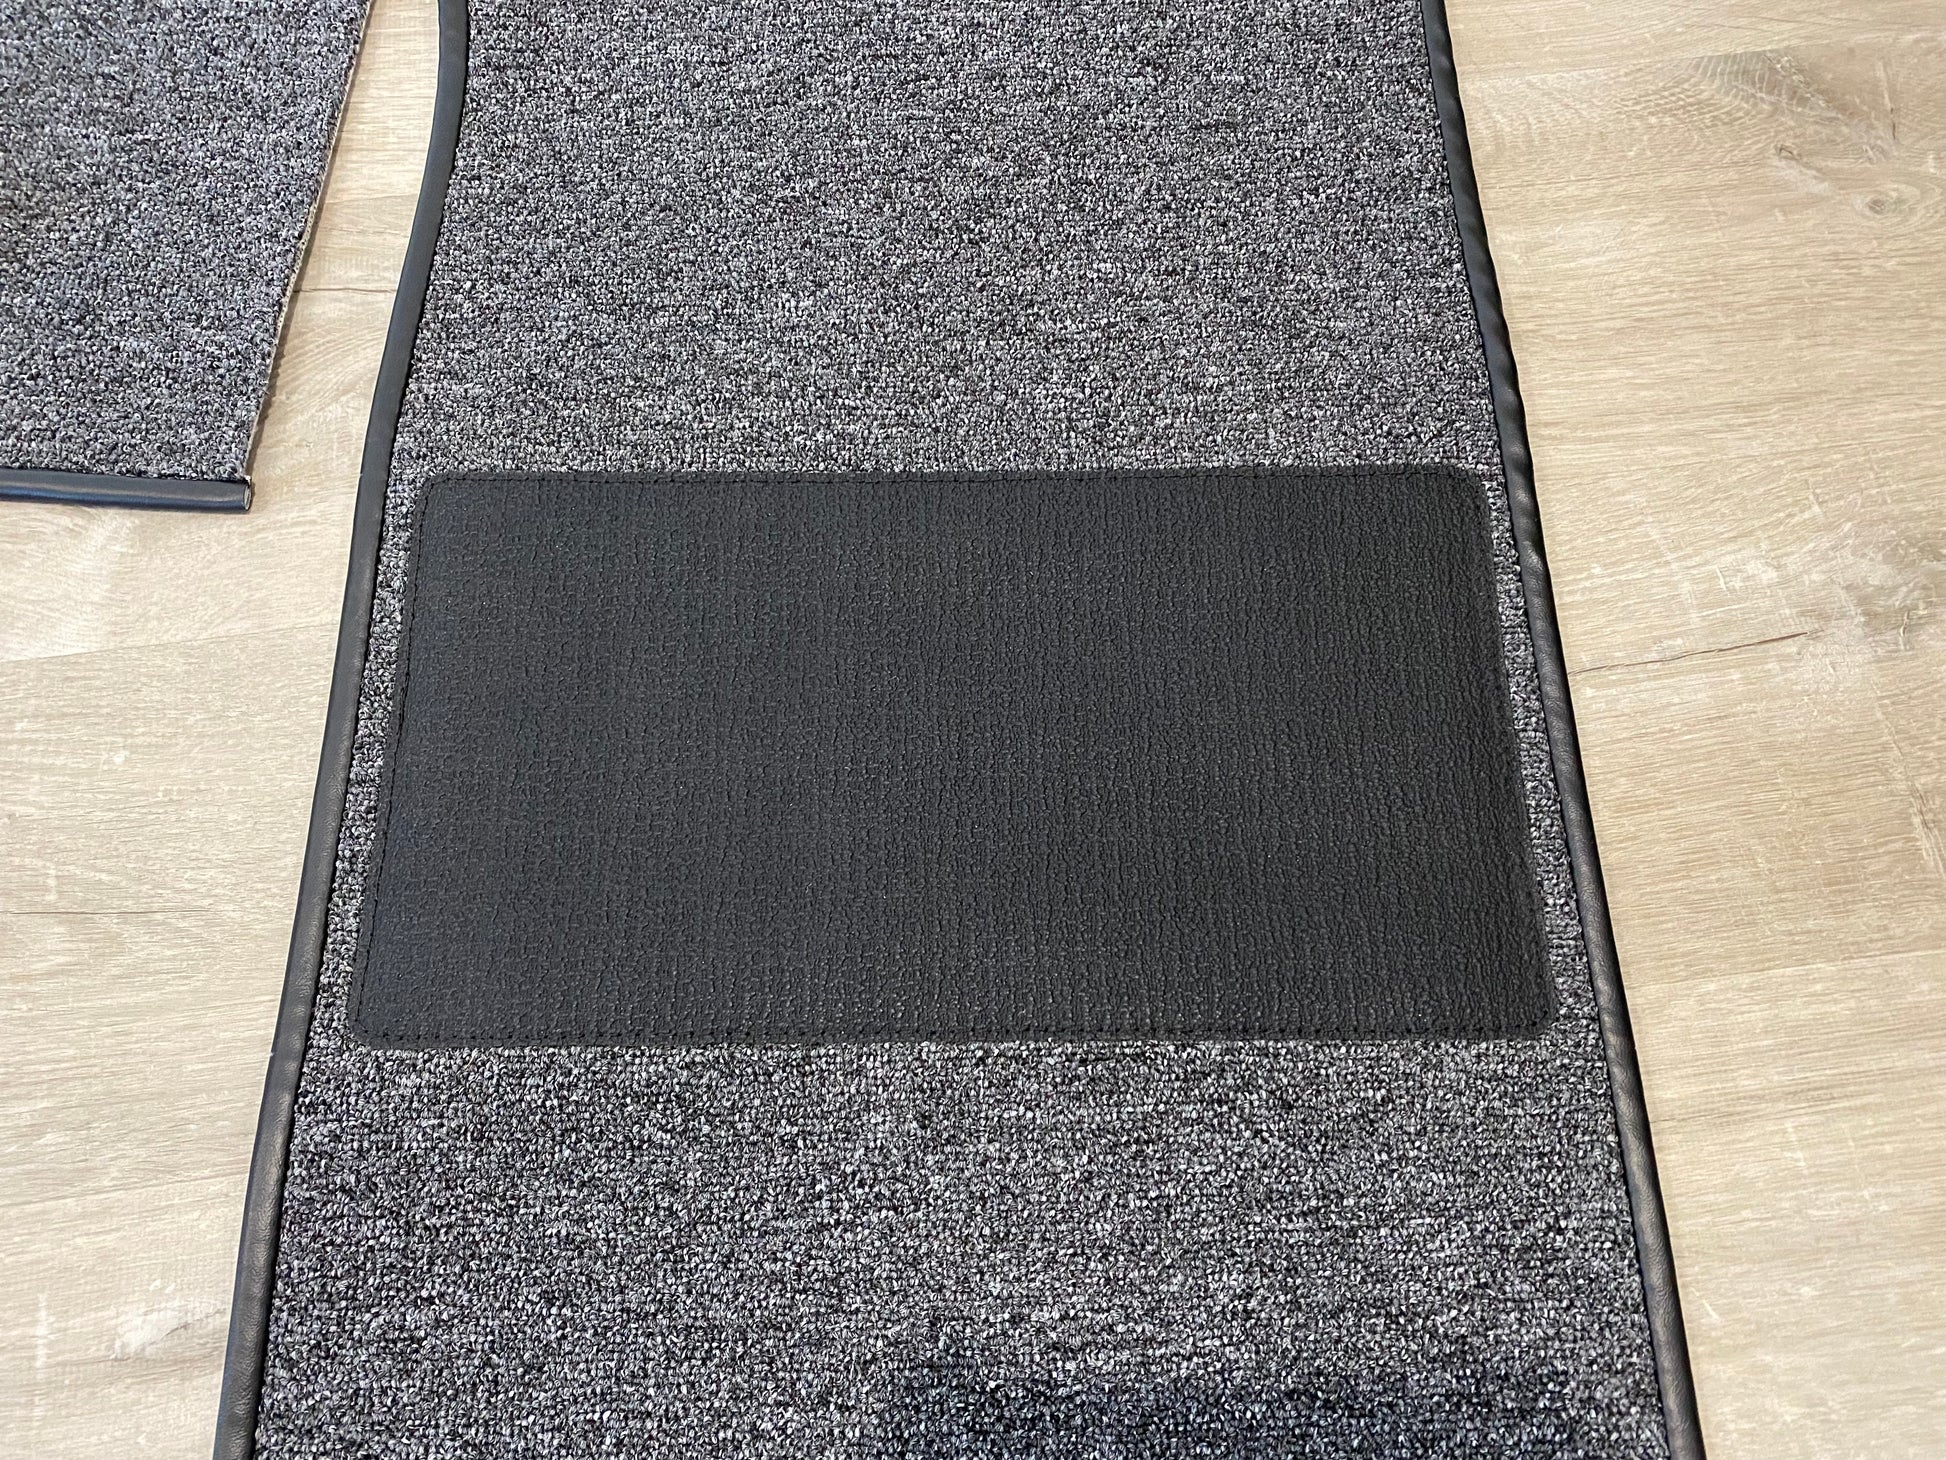 BMW 2002 Carpet Kit floor mat salt and pepper